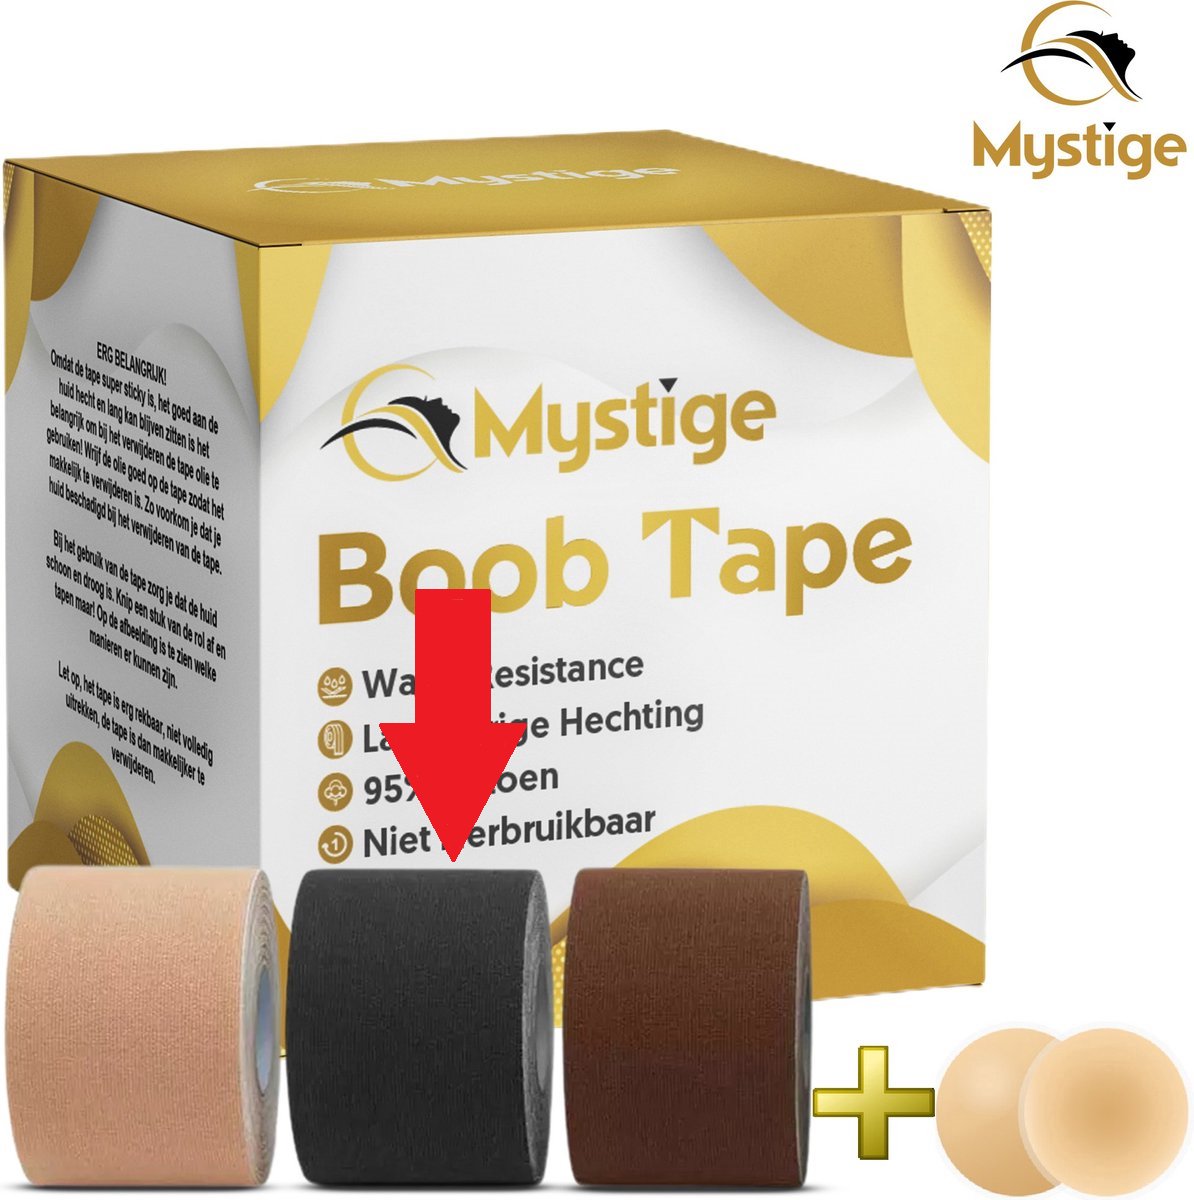 Mystige Boob Tape met Nipple Covers - Zwart - Tepelcovers - Tepel - Fashion Tape - BH Tape - 5 Meter